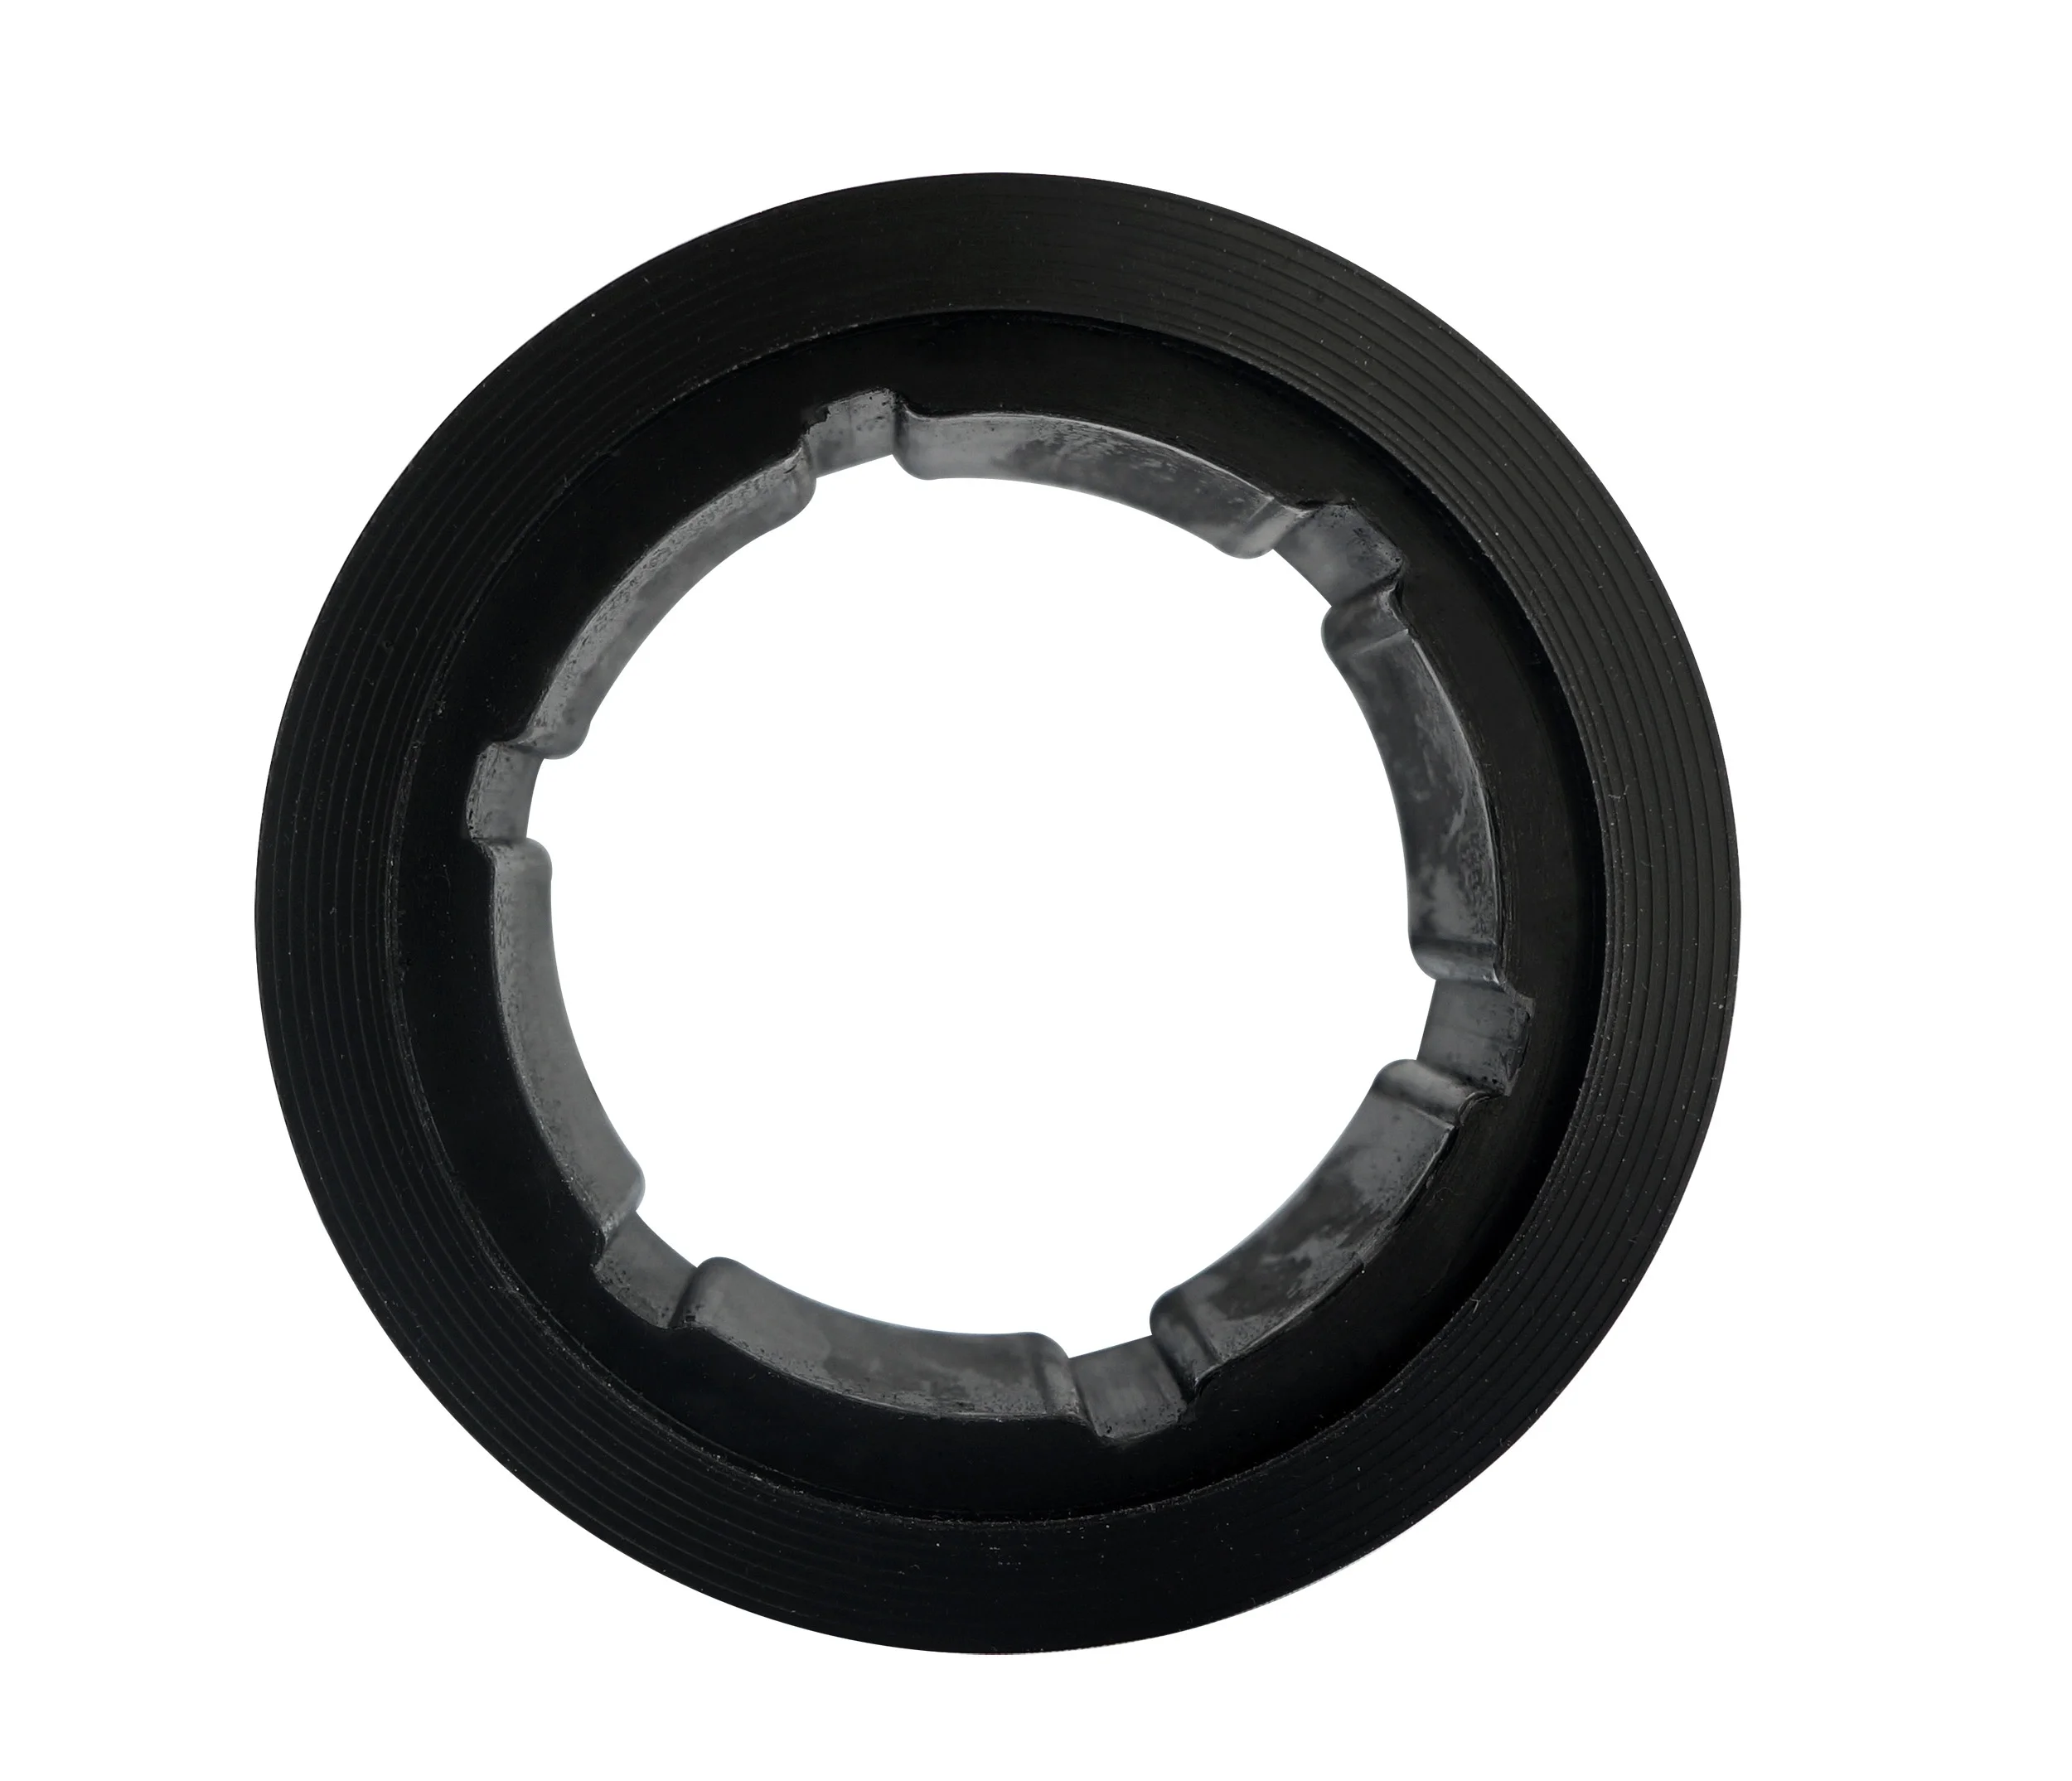 

Maytech 90mm skateboard lkw hub motor tyres with pu material for electric hub motor skateboard diy hub motor e skate, Orange